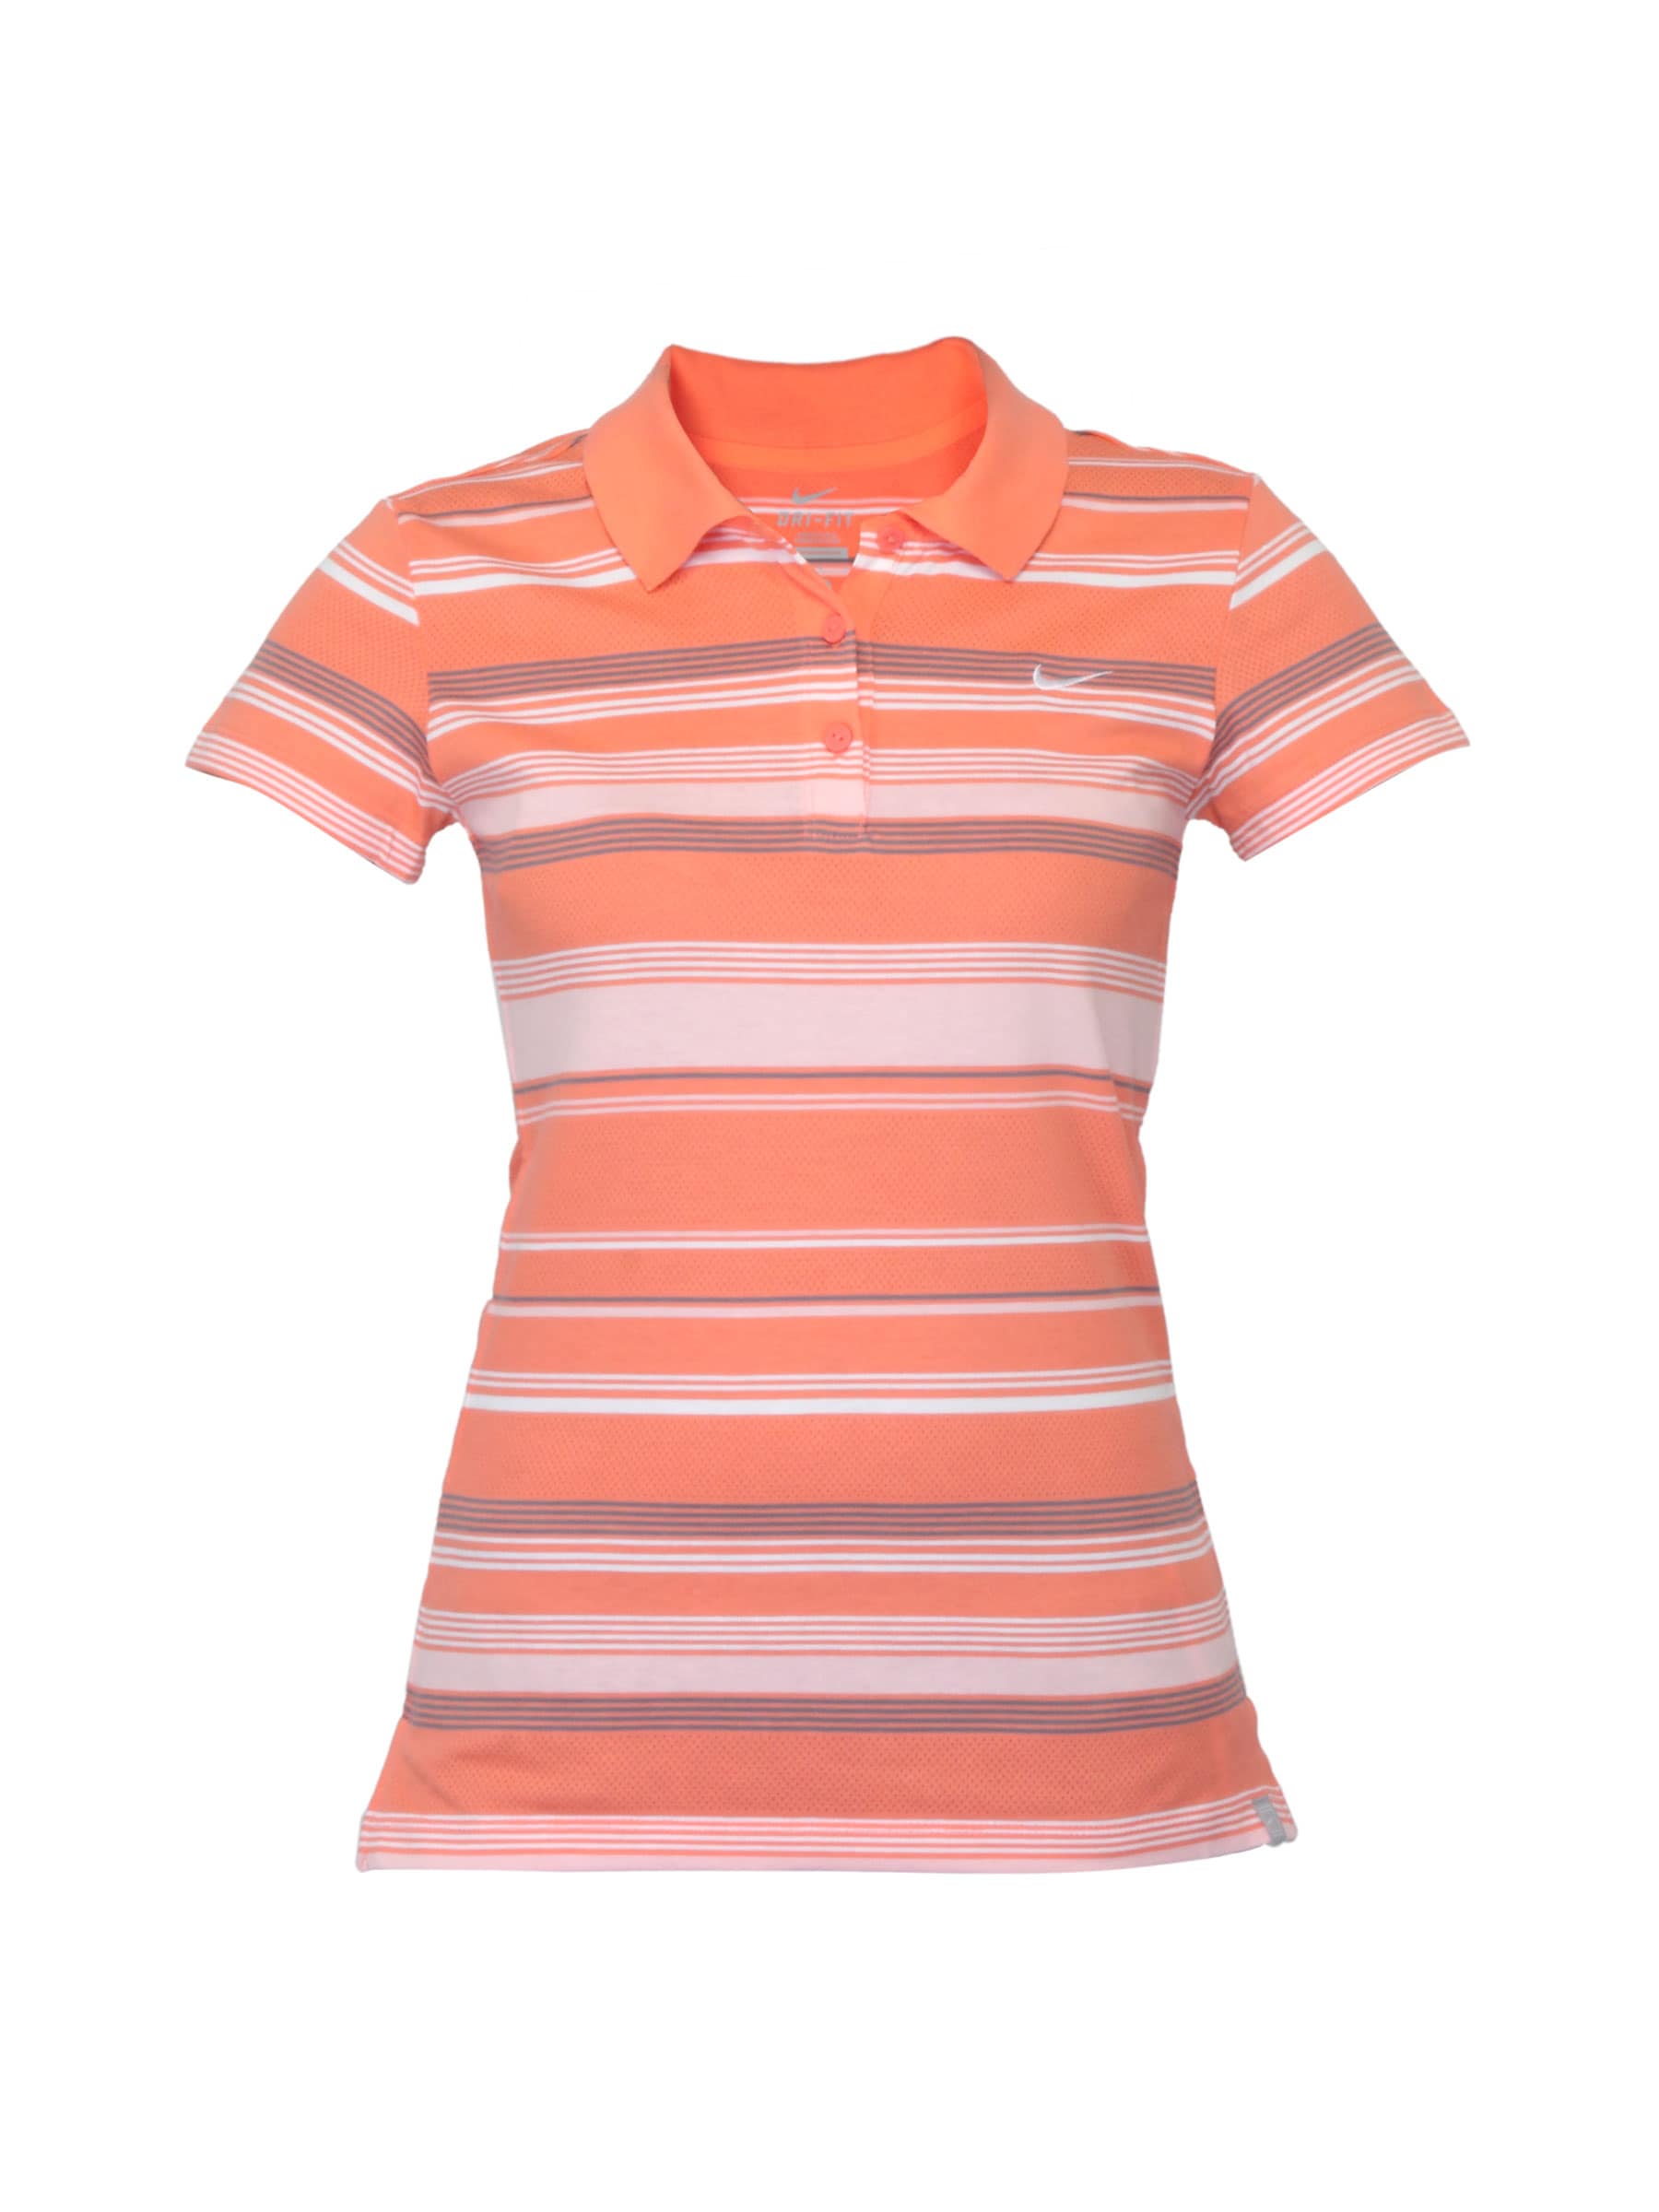 Nike Women Orange Striped Polo T-shirt